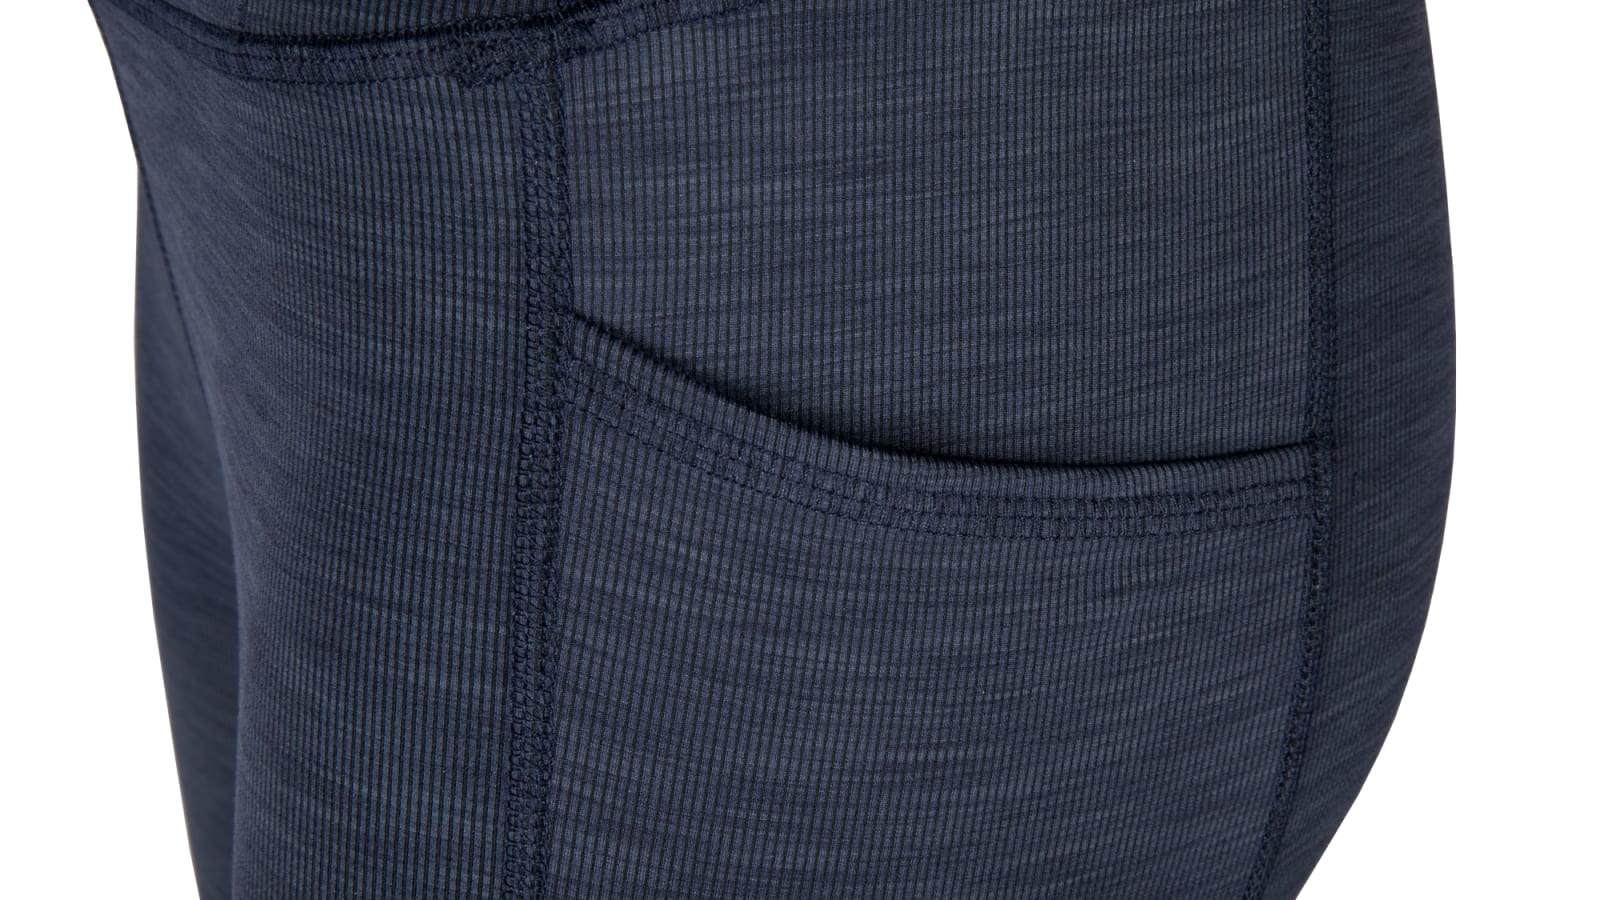 WOD Gear Clothing Interlock Rib Long Pants With Pockets - Navy